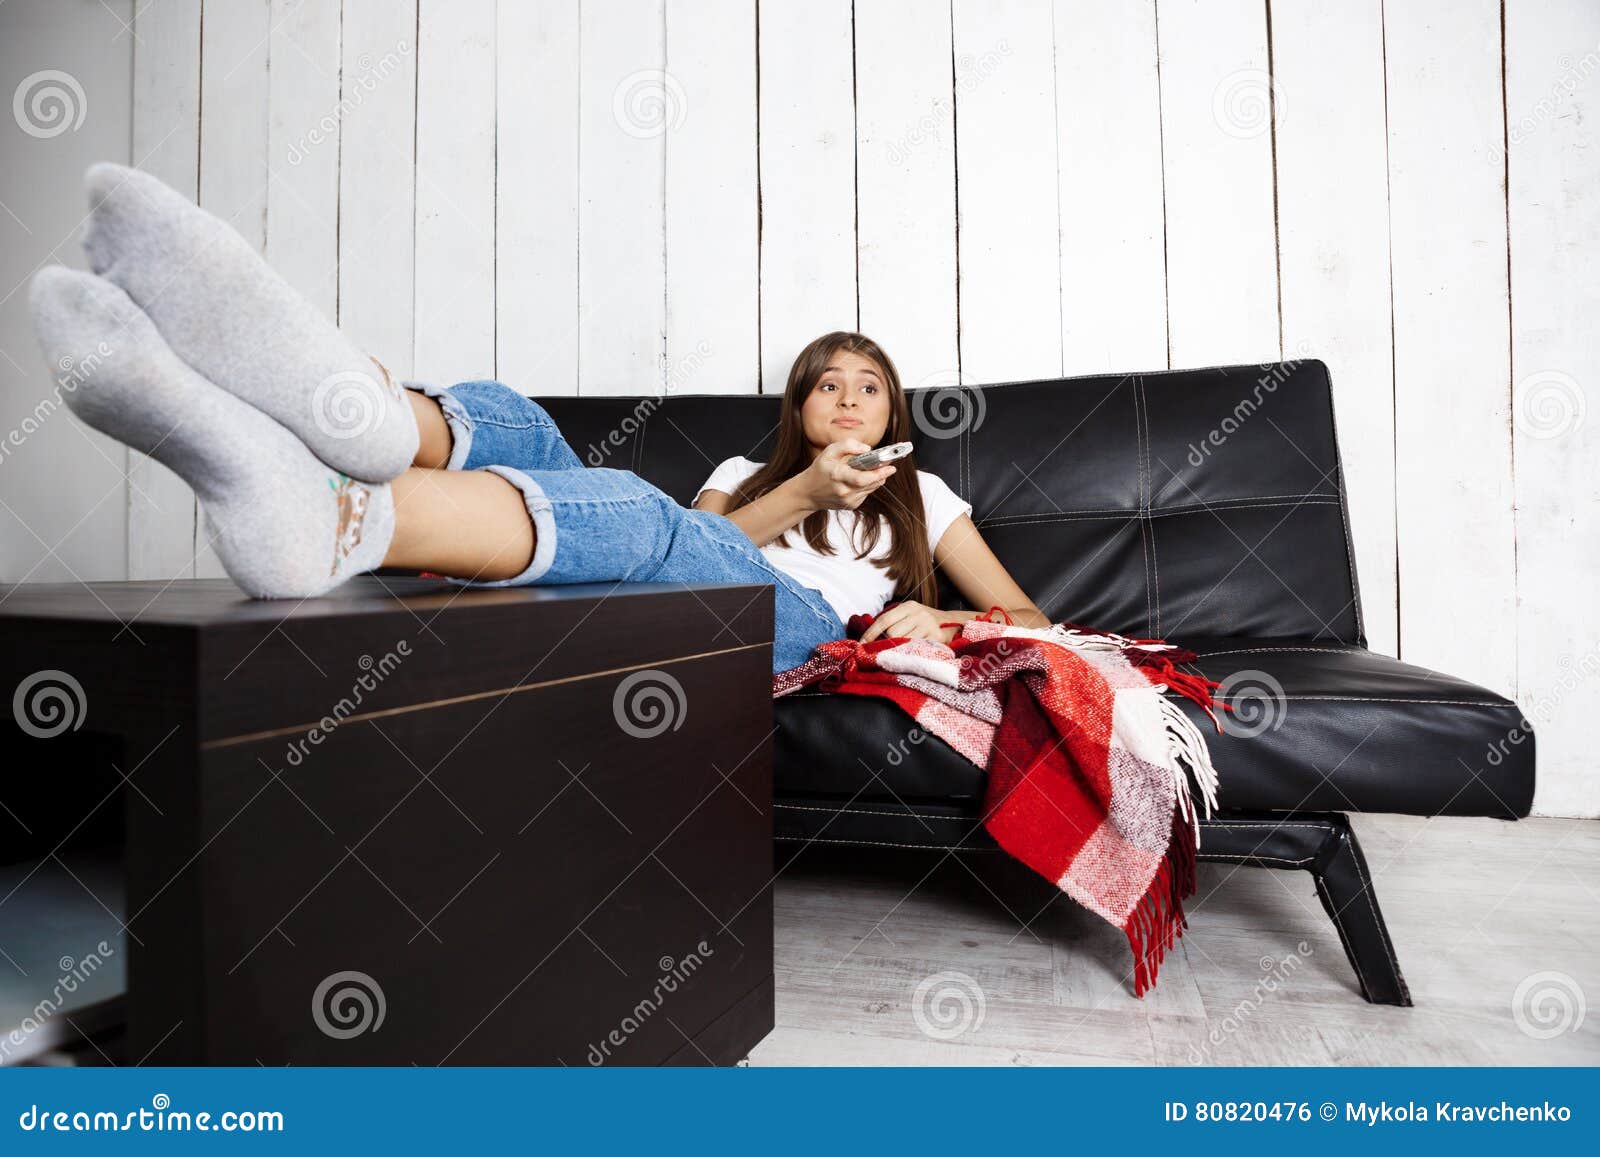 Уже на диване давно. Девушка лежит на диване. Девушка сидит на диване дома. Девушки в носках на диване. Усталая женщина на диване.